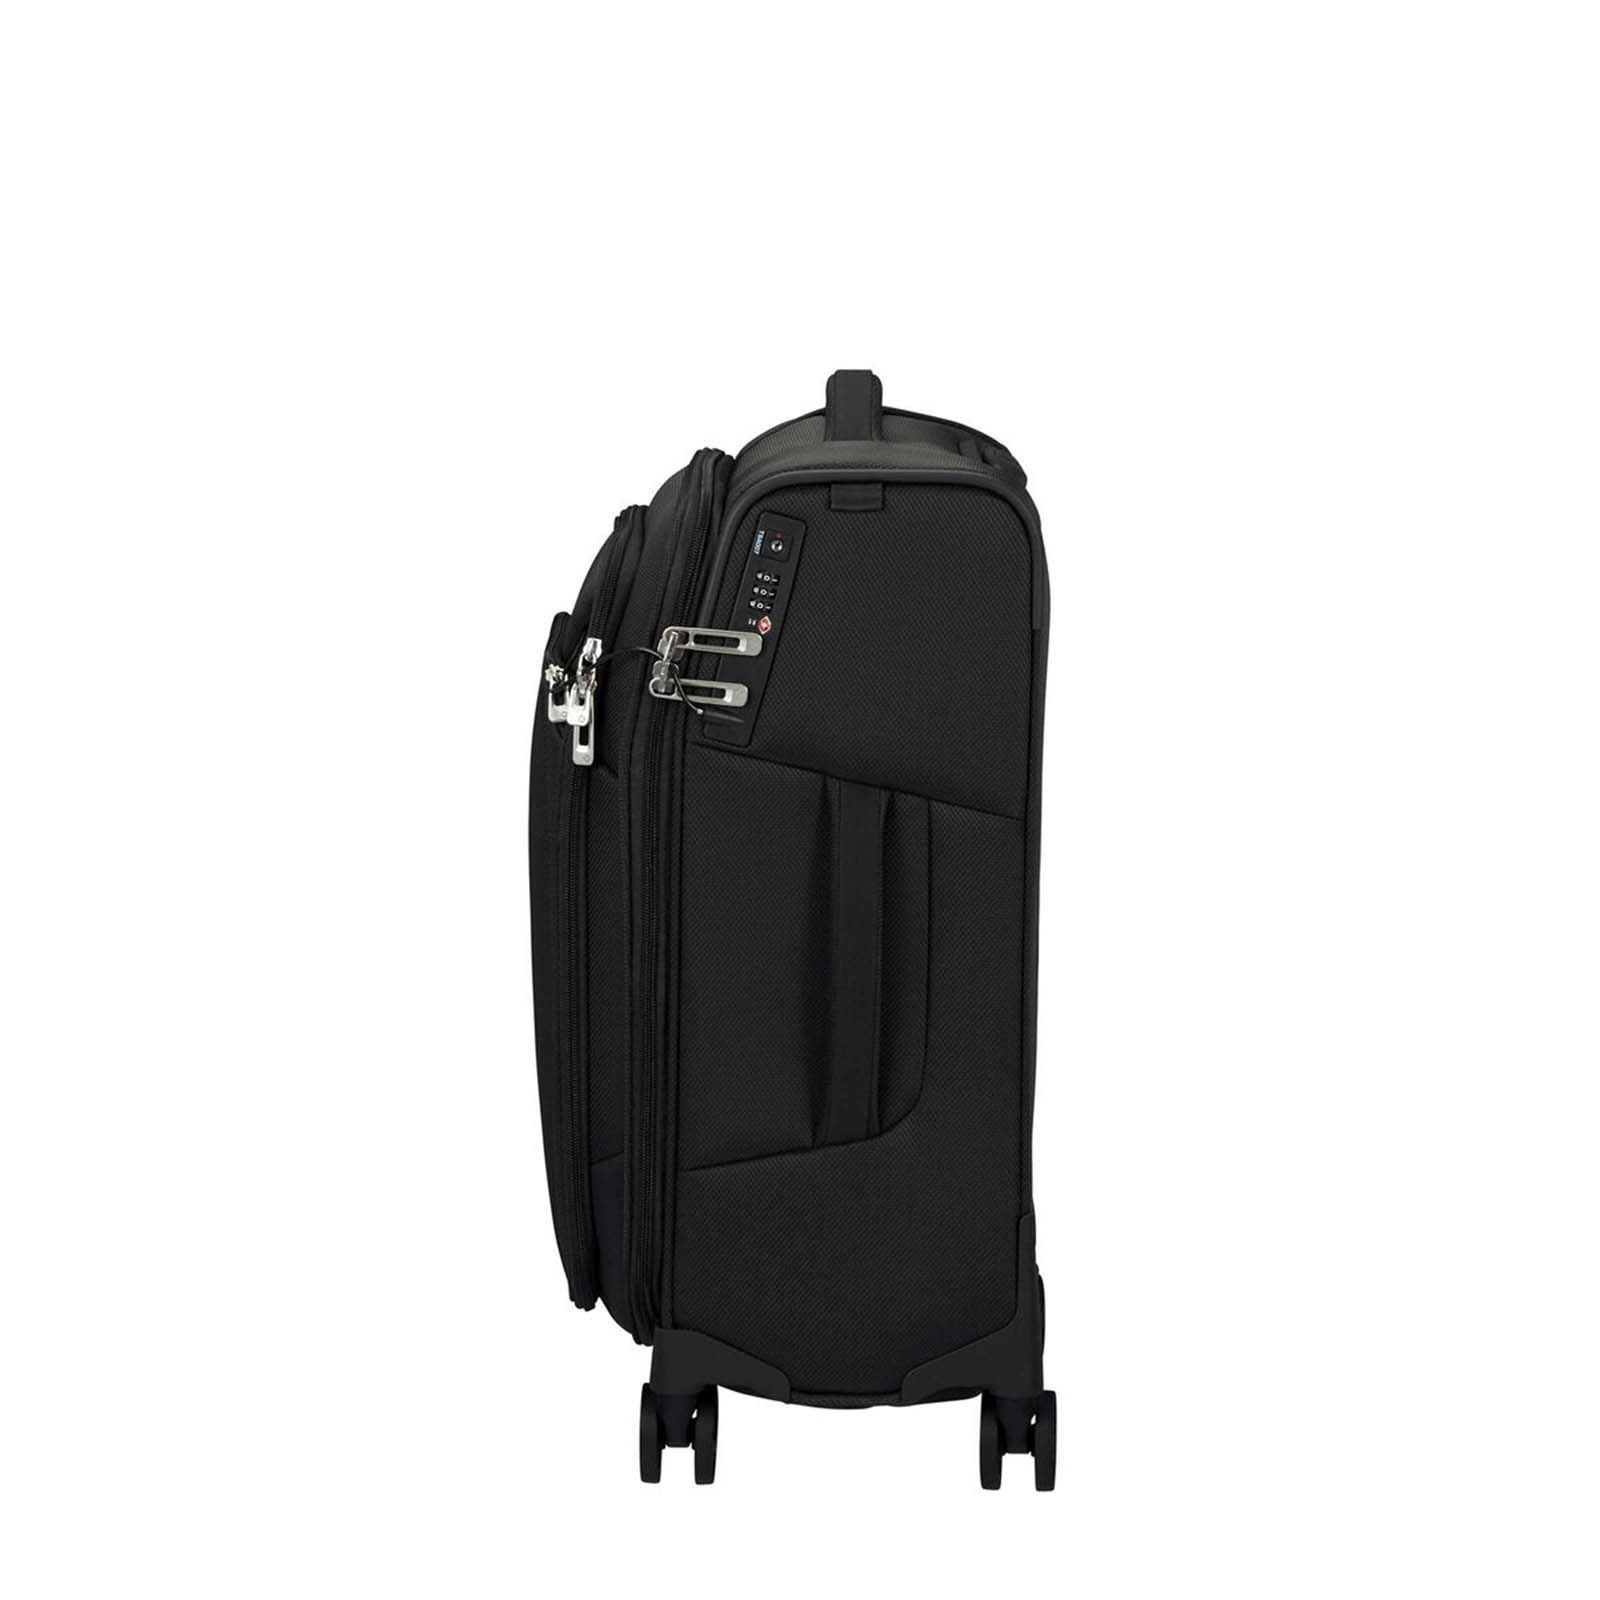 Samsonite-Respark-55cm-Carry-On-Suitcase-Ozone-Black-Handle